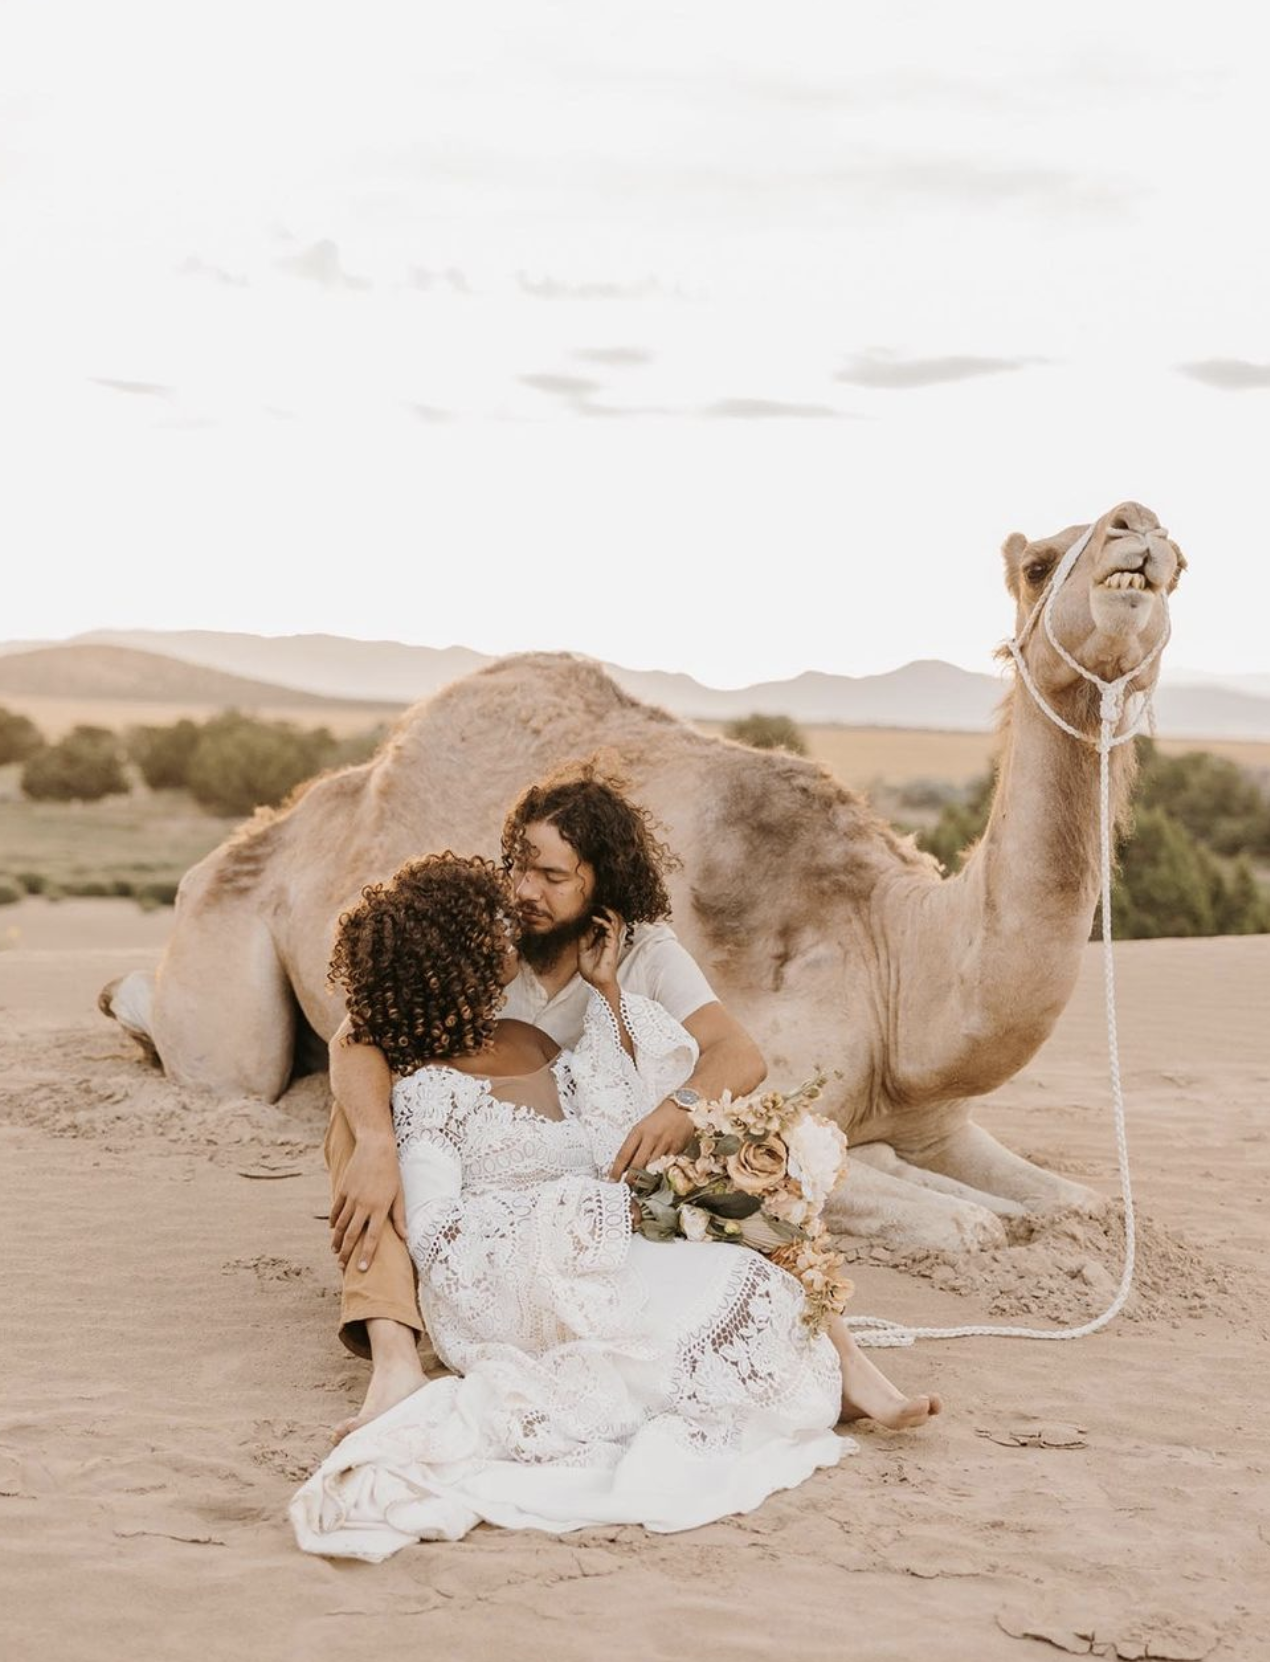 NC Desination Wedding Photographer - Sand Dunes